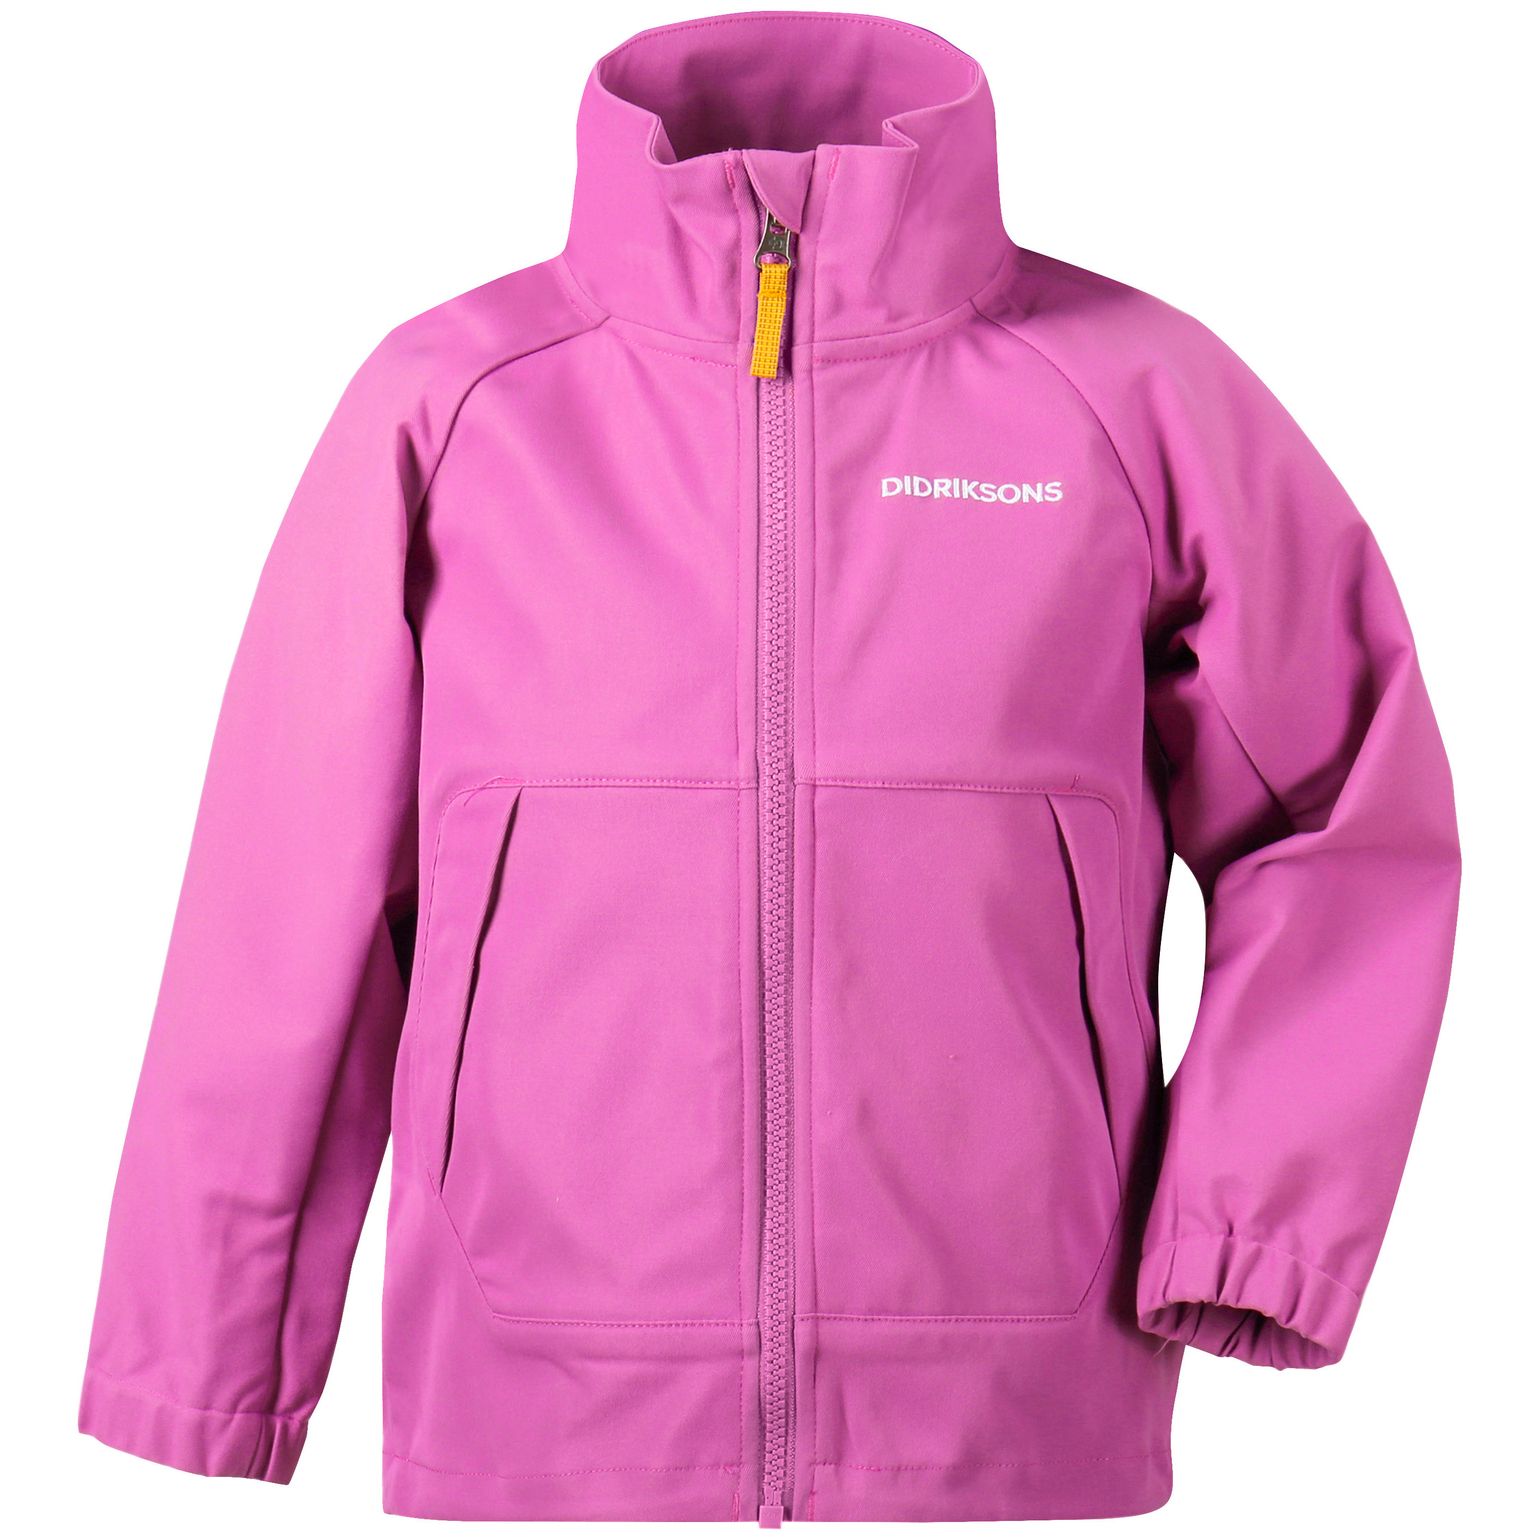 Kids' Zea Stretch Jacket Radiant Purple